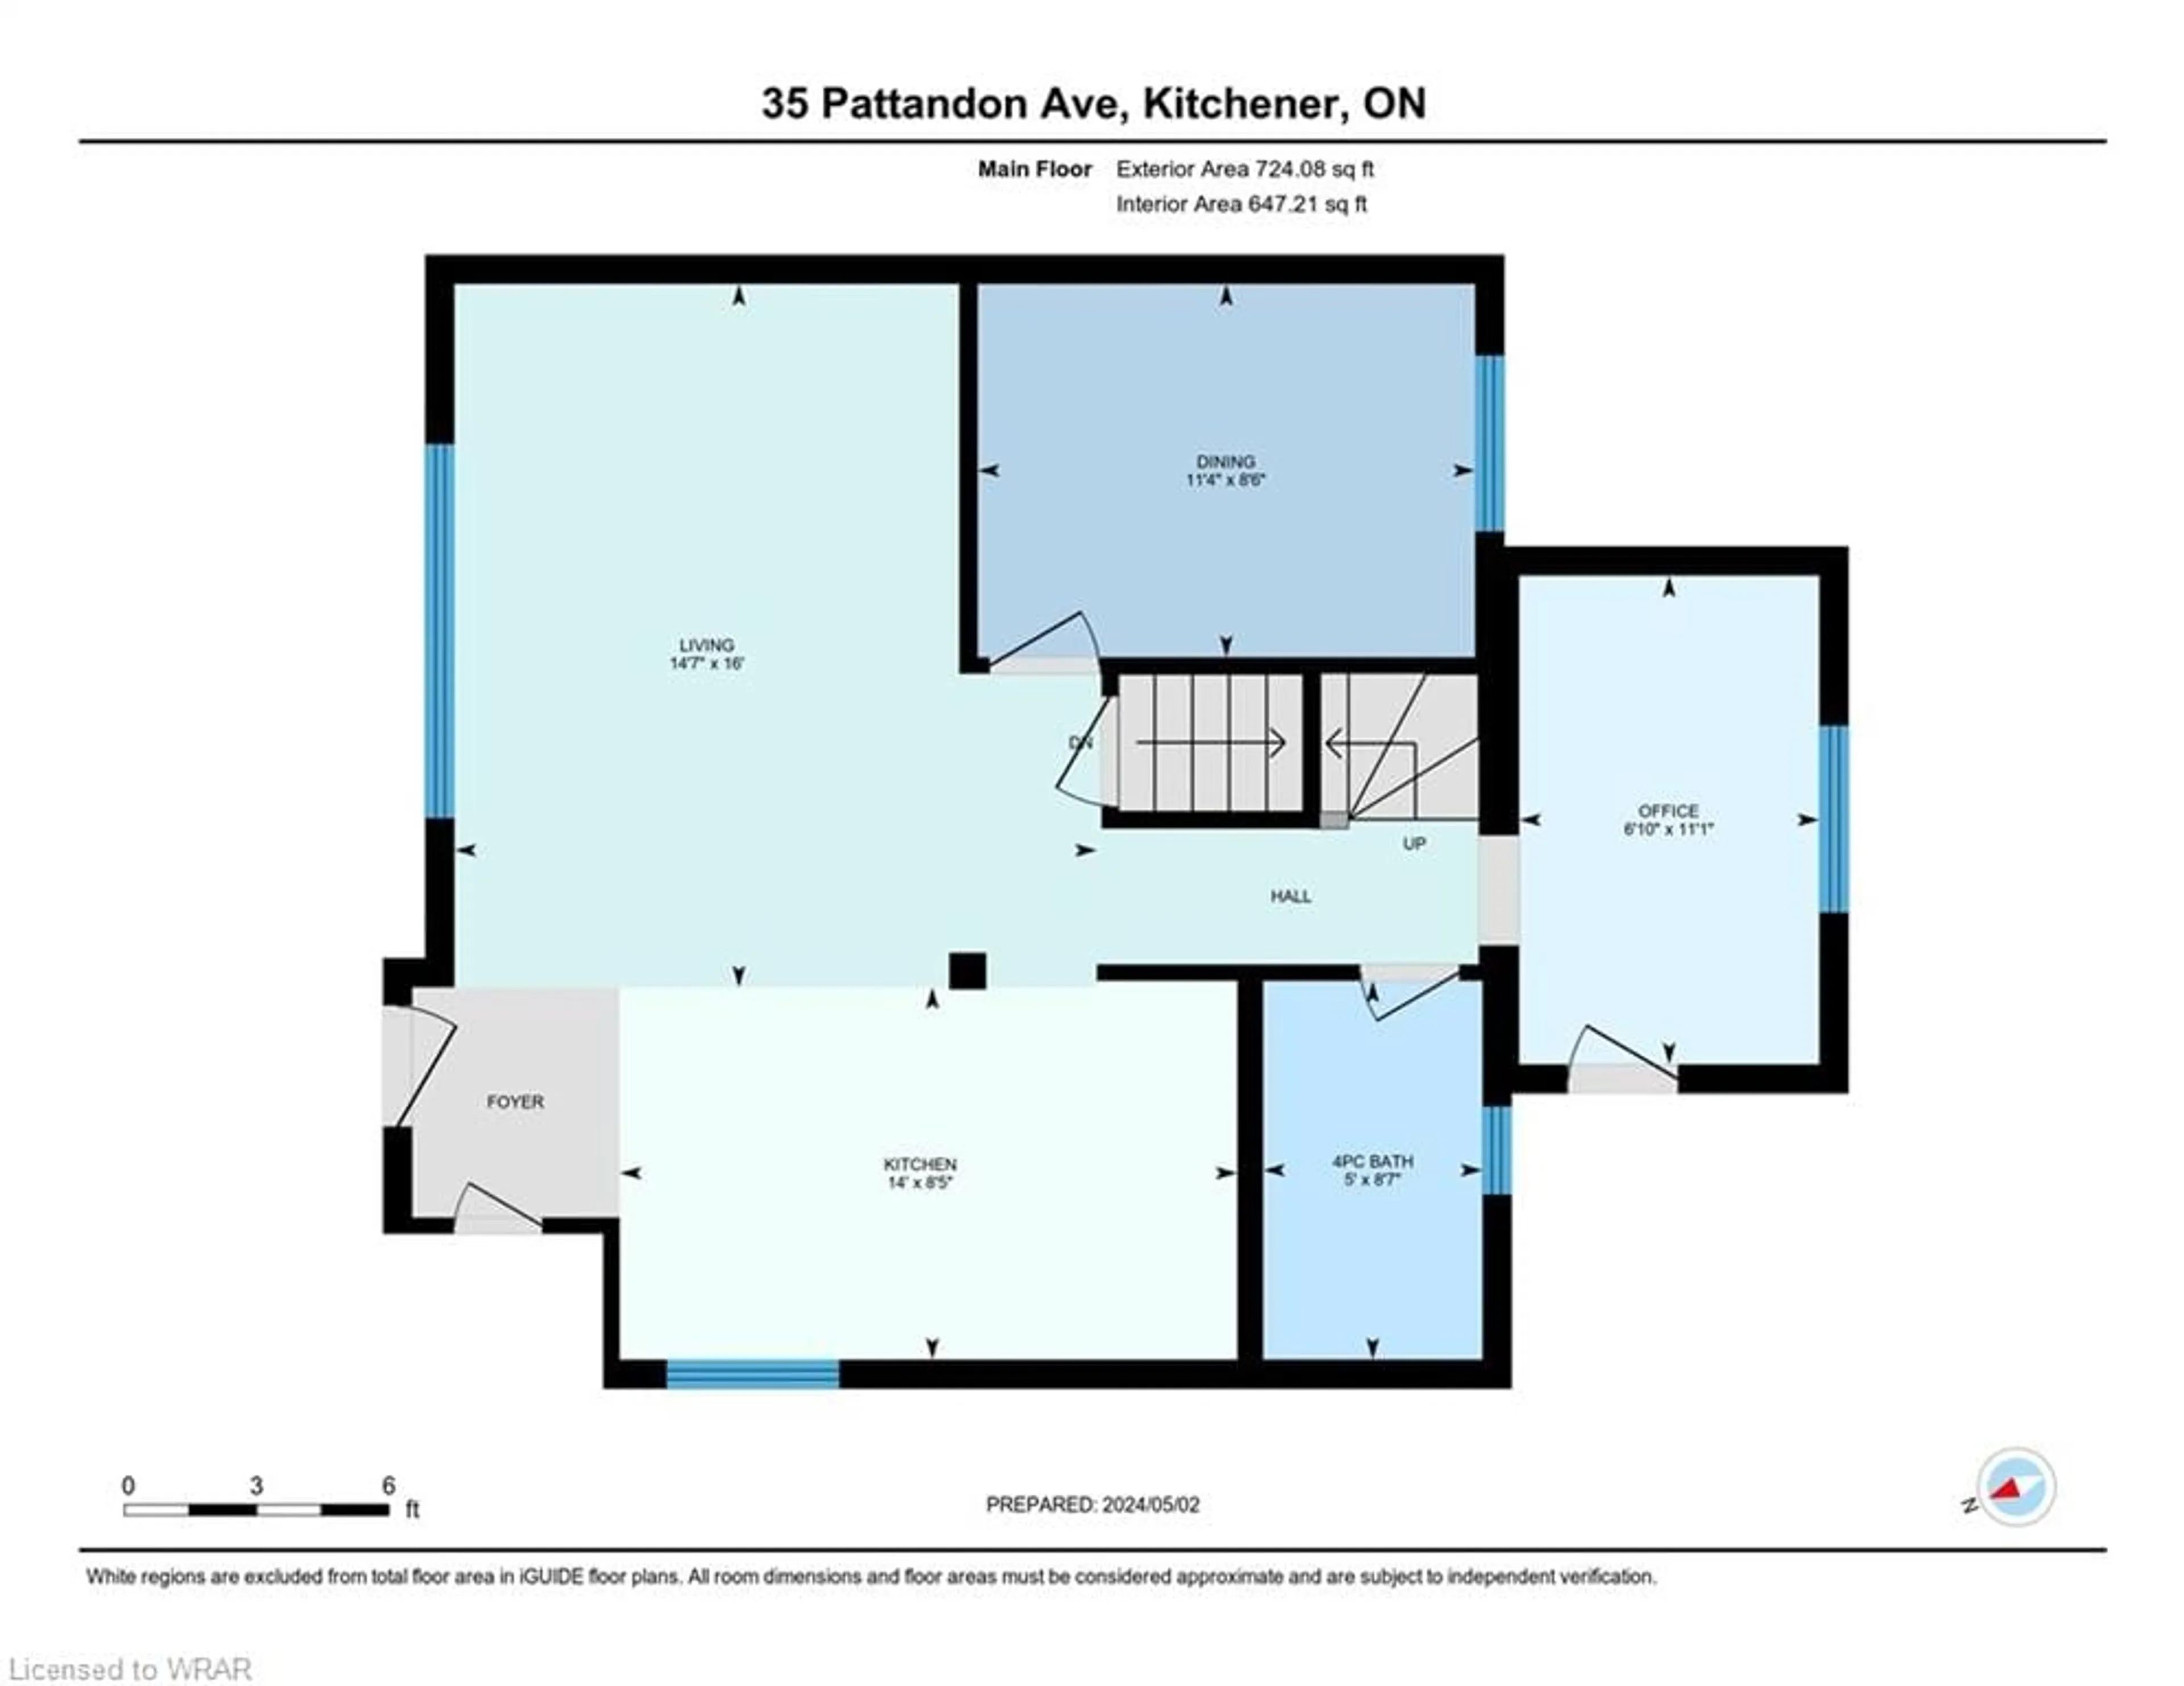 Floor plan for 35 Pattandon Ave, Kitchener Ontario N2M 3S6